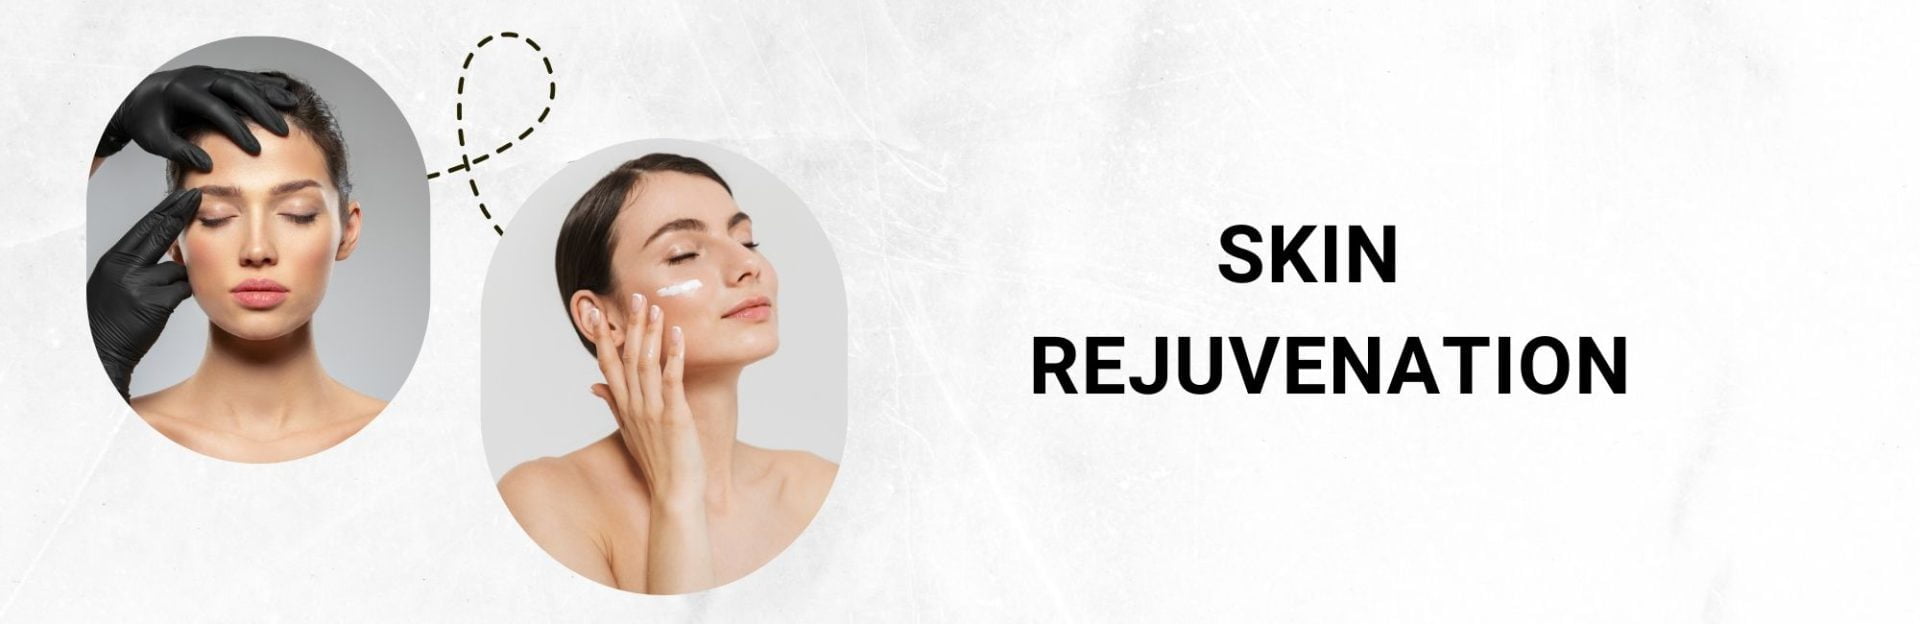 Skin Rejuvenation Treatment In Udaipur, Skin Rejuvenation In Udaipur, Arth Skin & Fitness